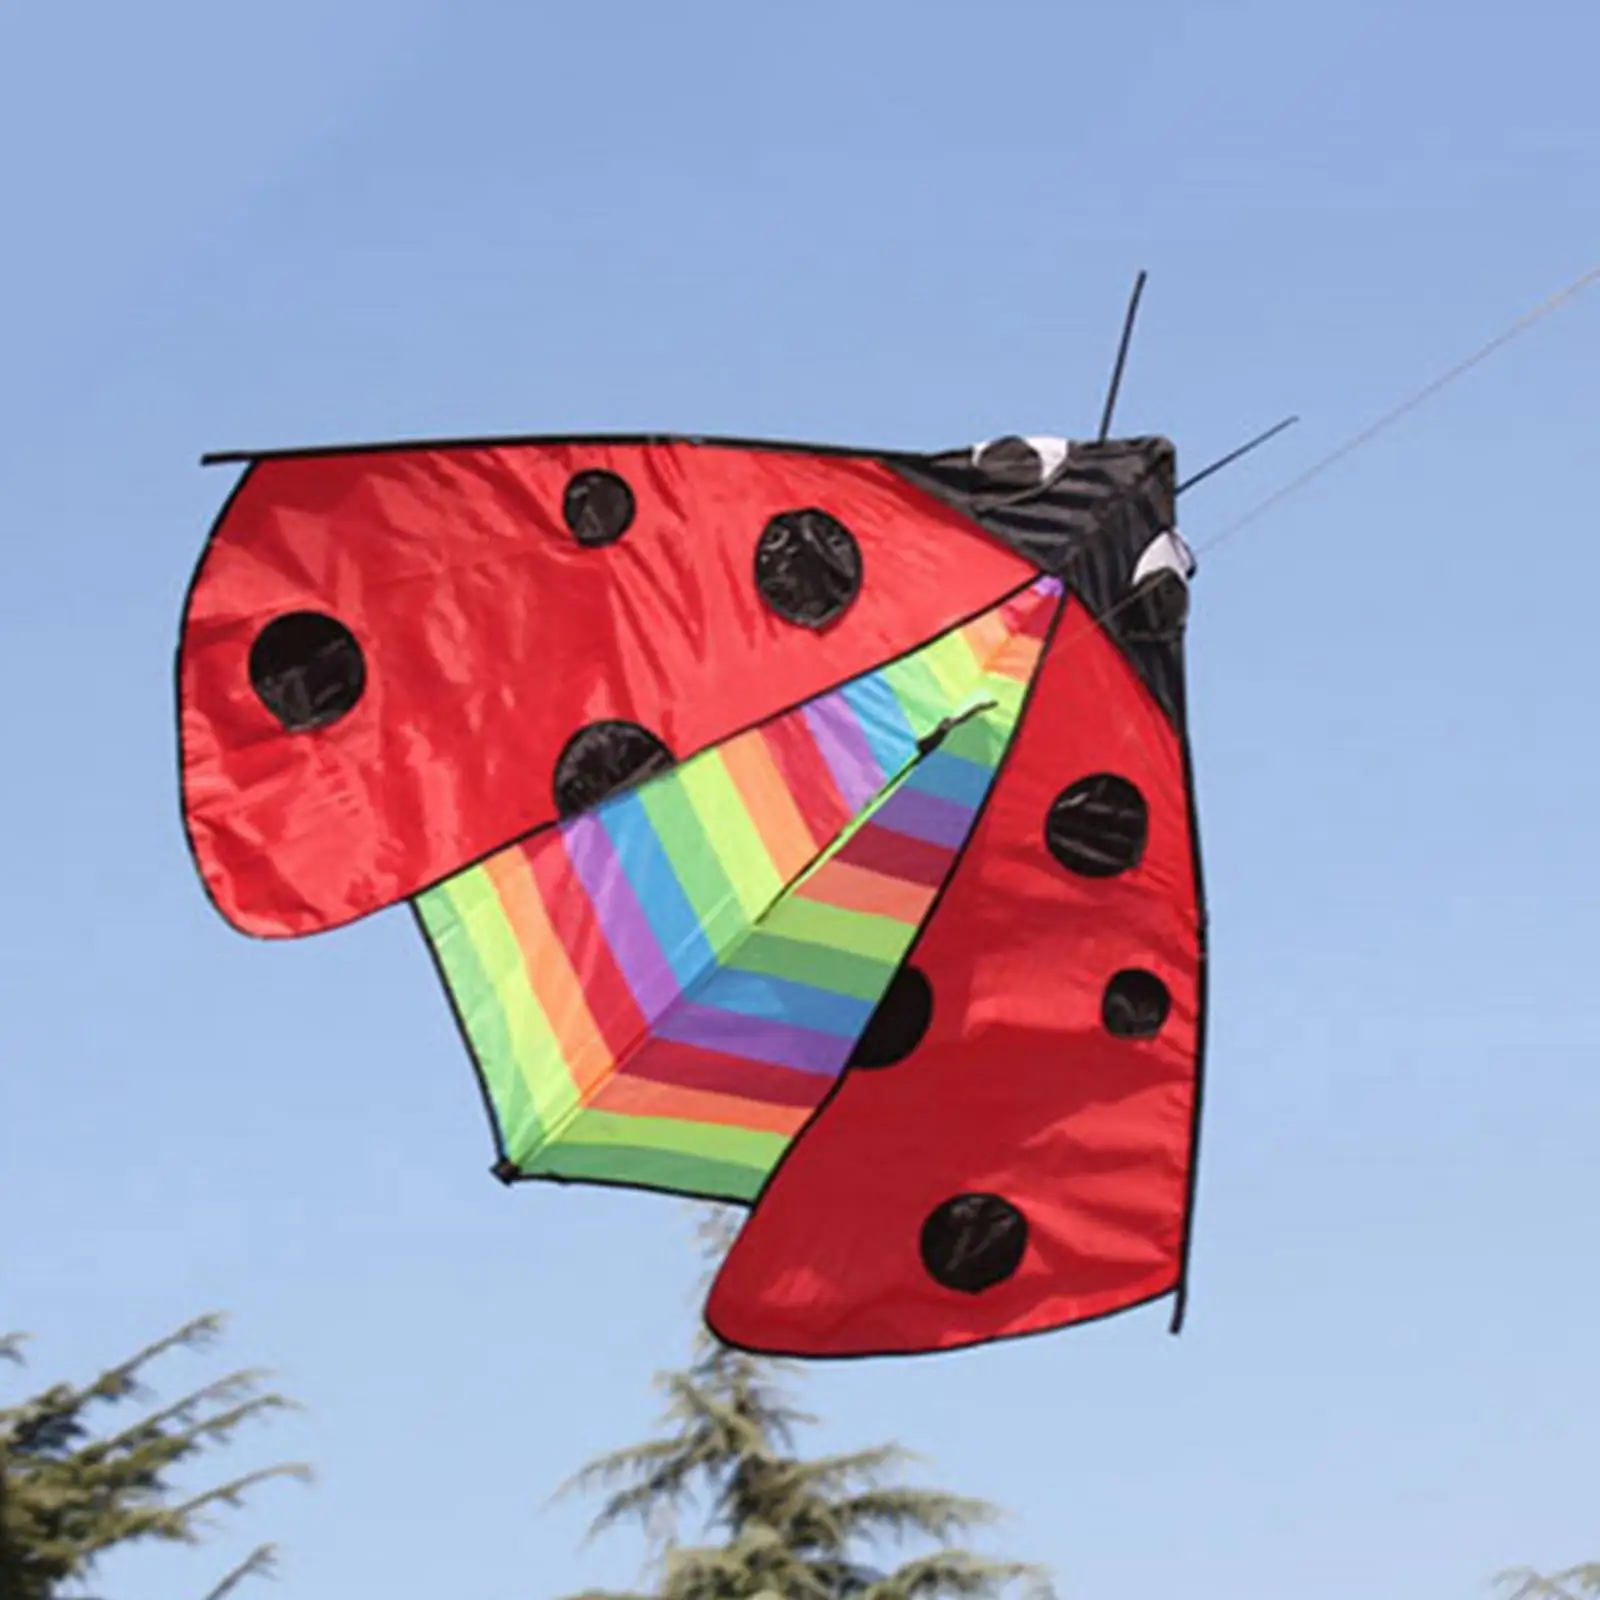 Foldable Delta Kite Fly Kite Single-Line Easy Control Windsock Huge Wingspan Flying Toys Large Triangle Ladybug Kite for Garden